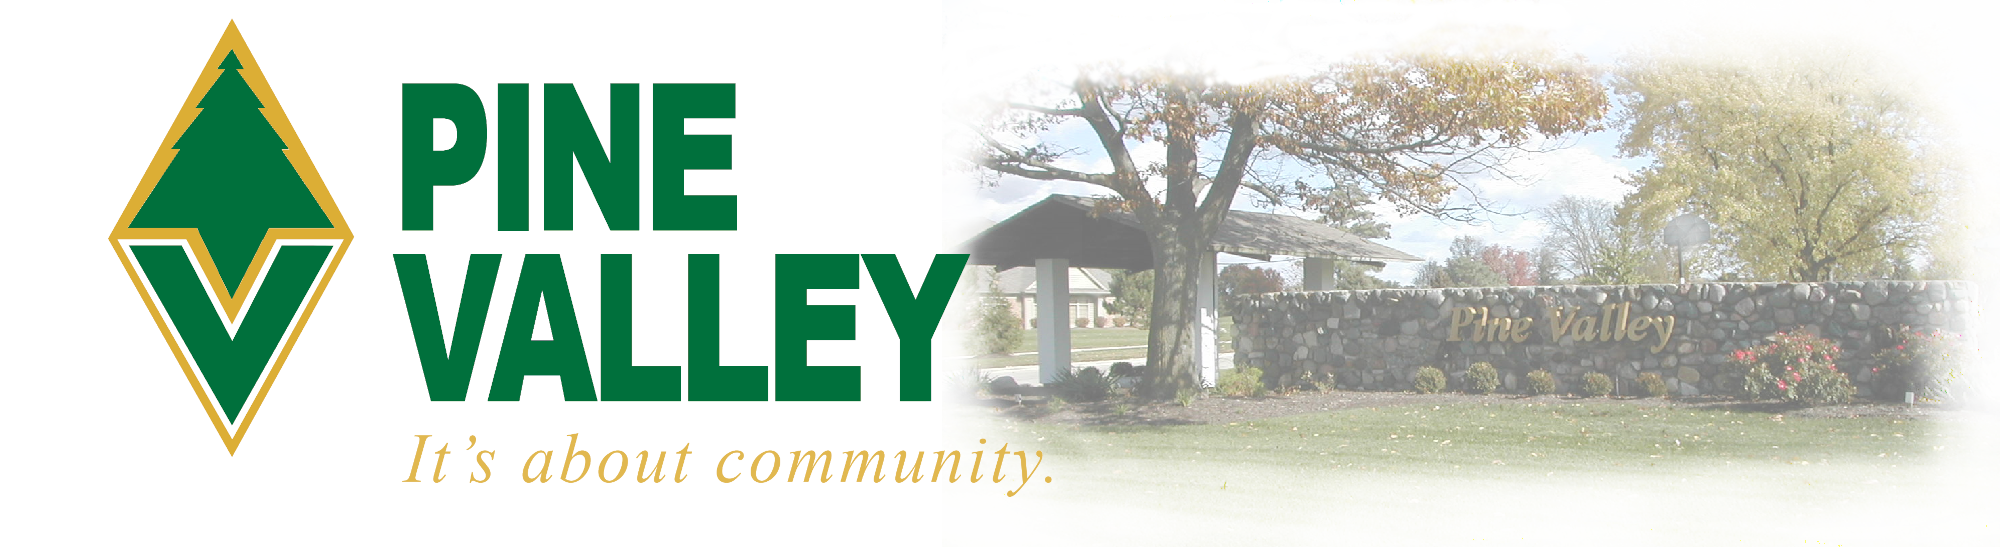 Pine Valley Community Association